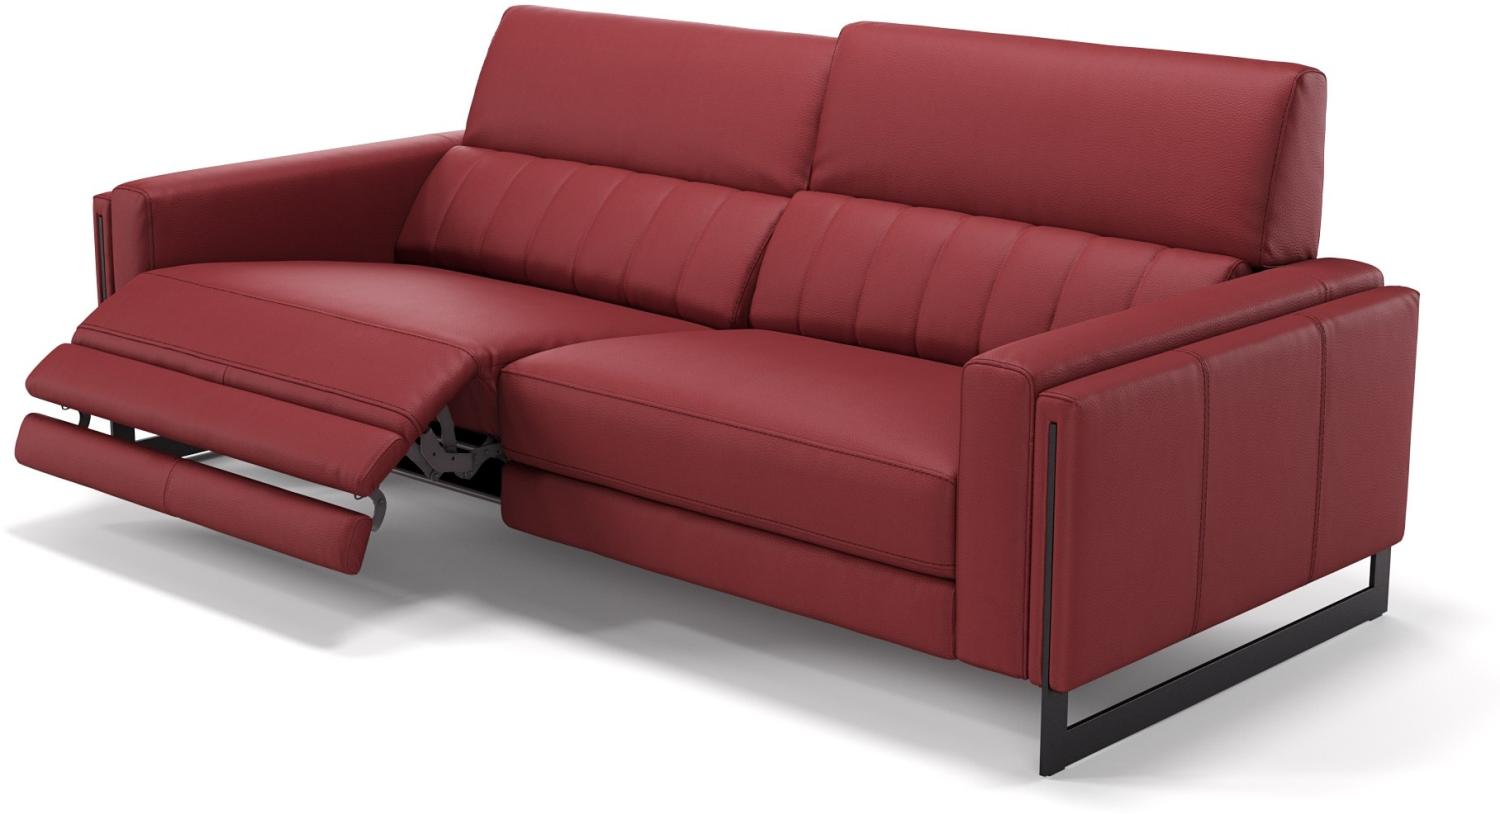 Sofanella 3-Sitzer MARA Leder Sofa Sofagarnitur in Rot M: 232 Breite x 101 Tiefe Bild 1